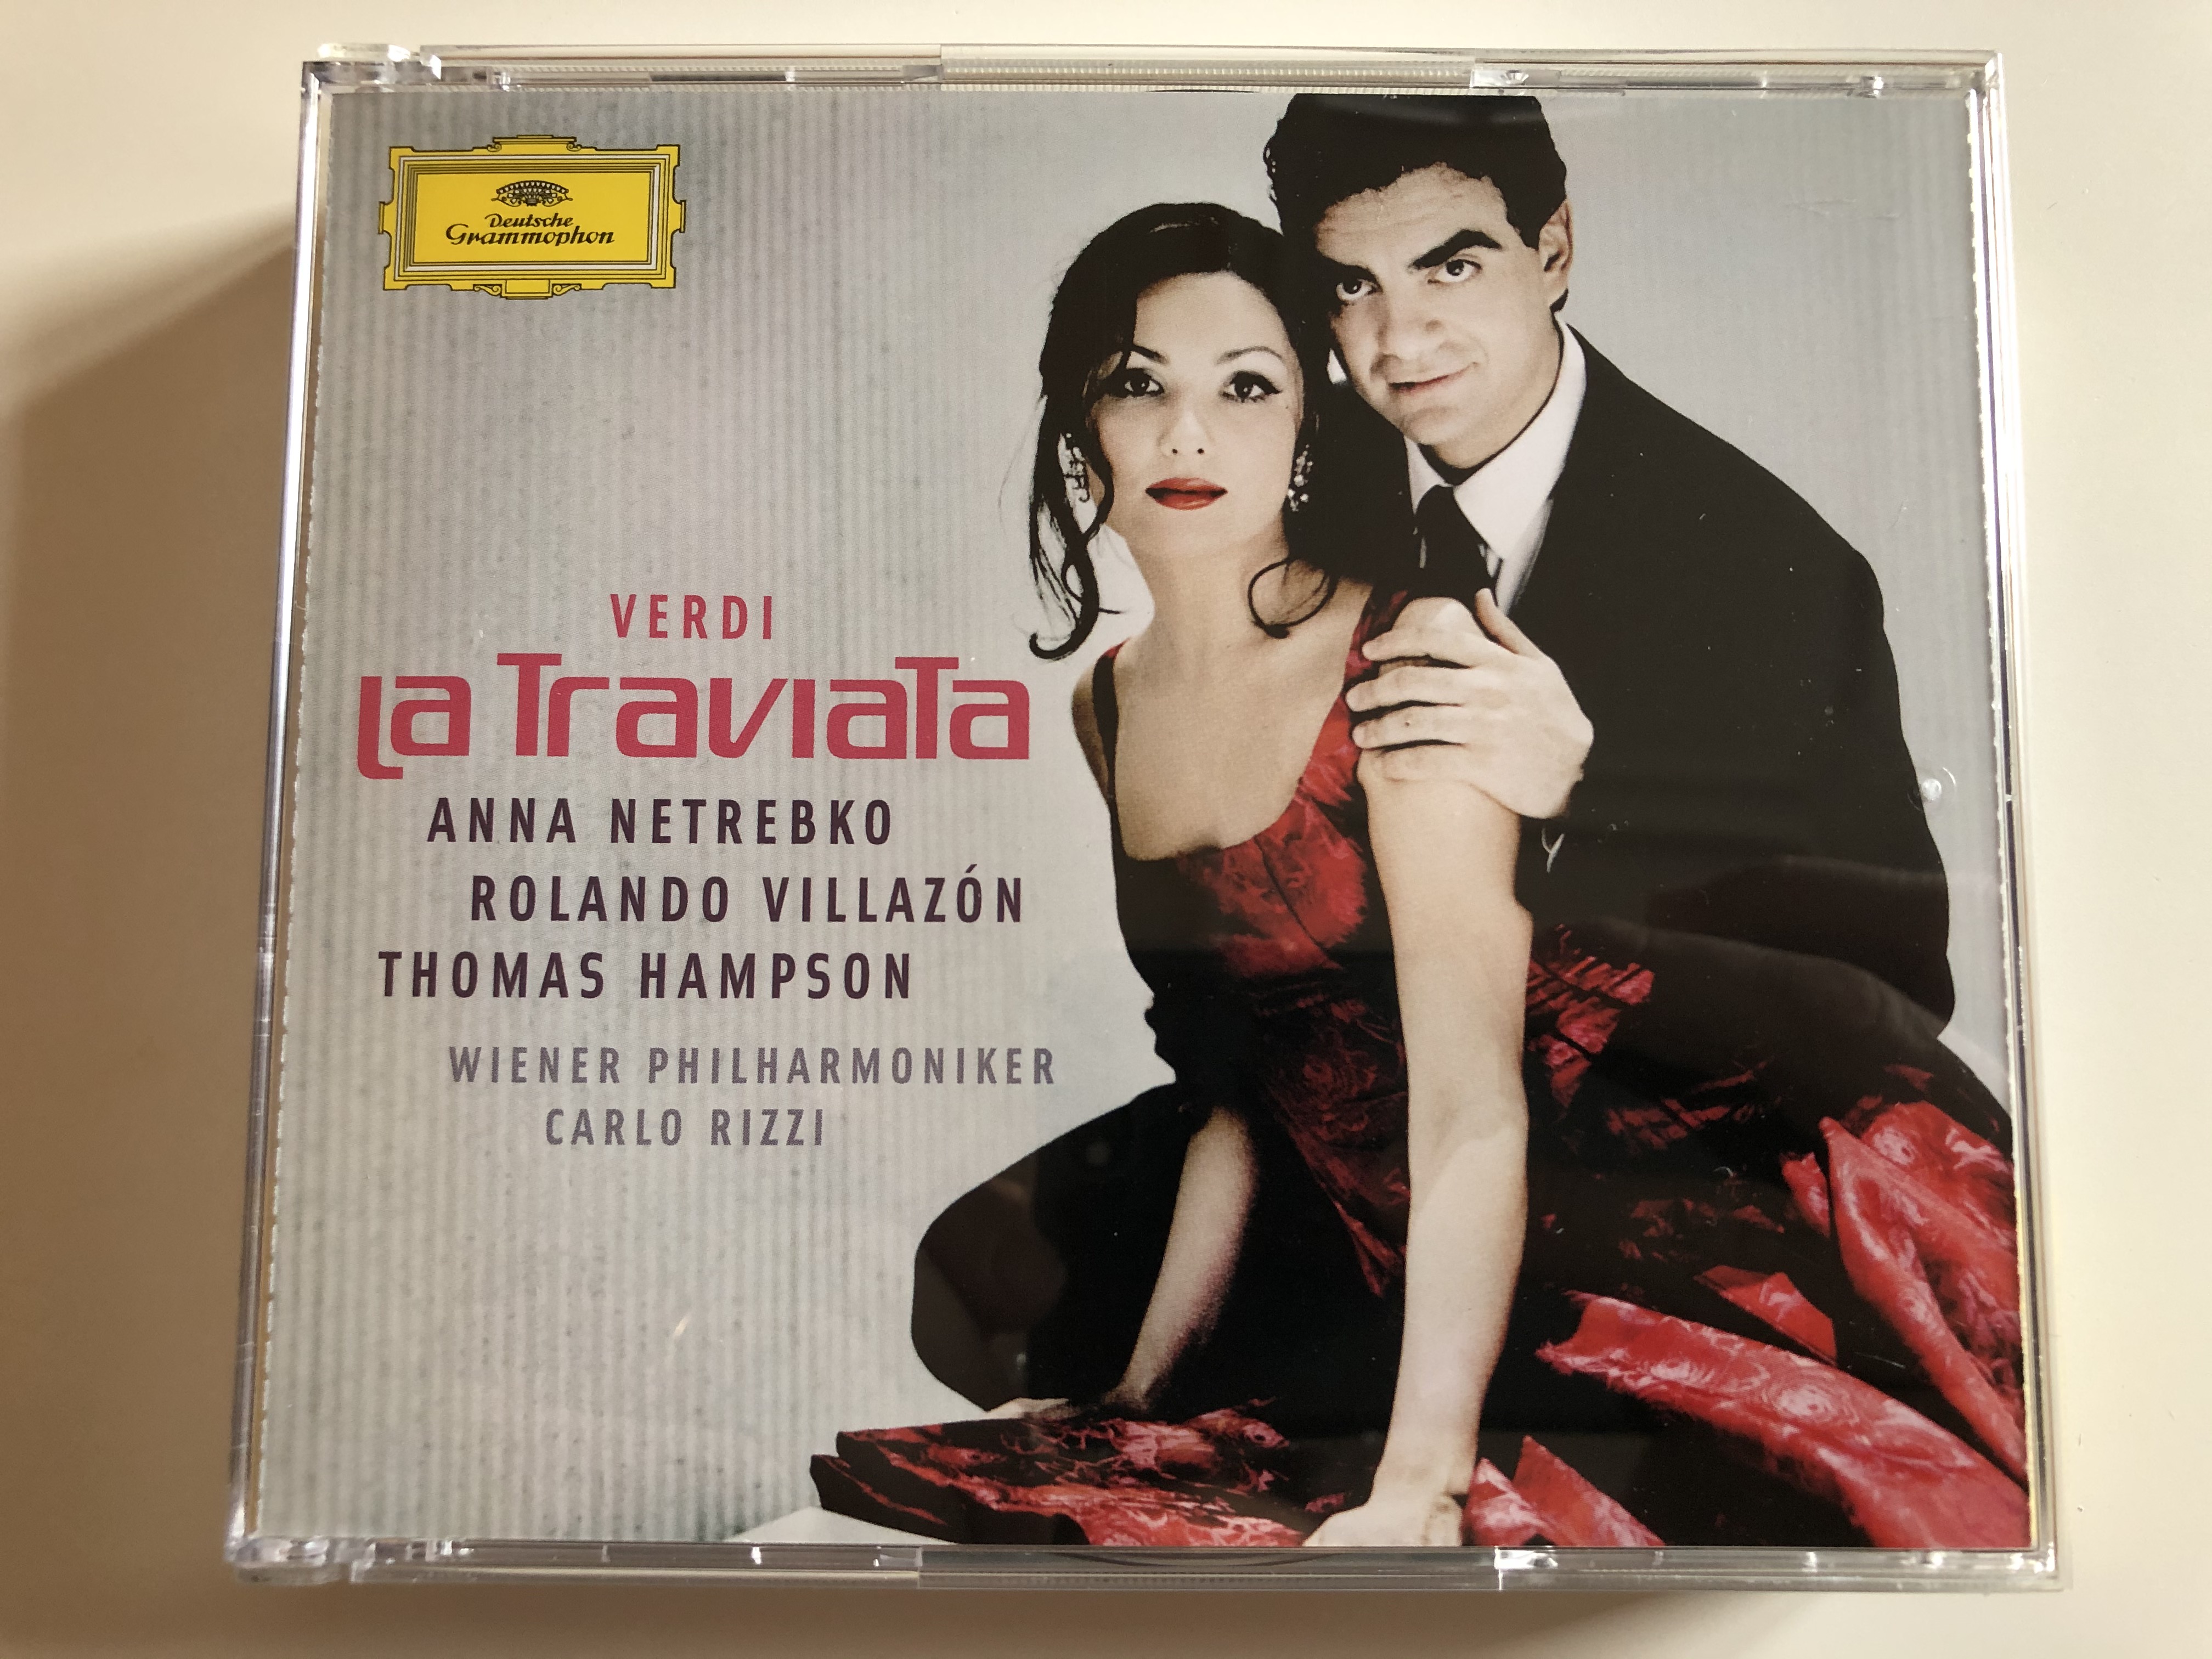 verdi-la-traviata-anna-netrebko-rolando-villaz-n-thomas-hampson-wiener-philharmoniker-carlo-rizzi-deutsche-grammophon-2x-audio-cd-2005-00289-477-5933-1-.jpg